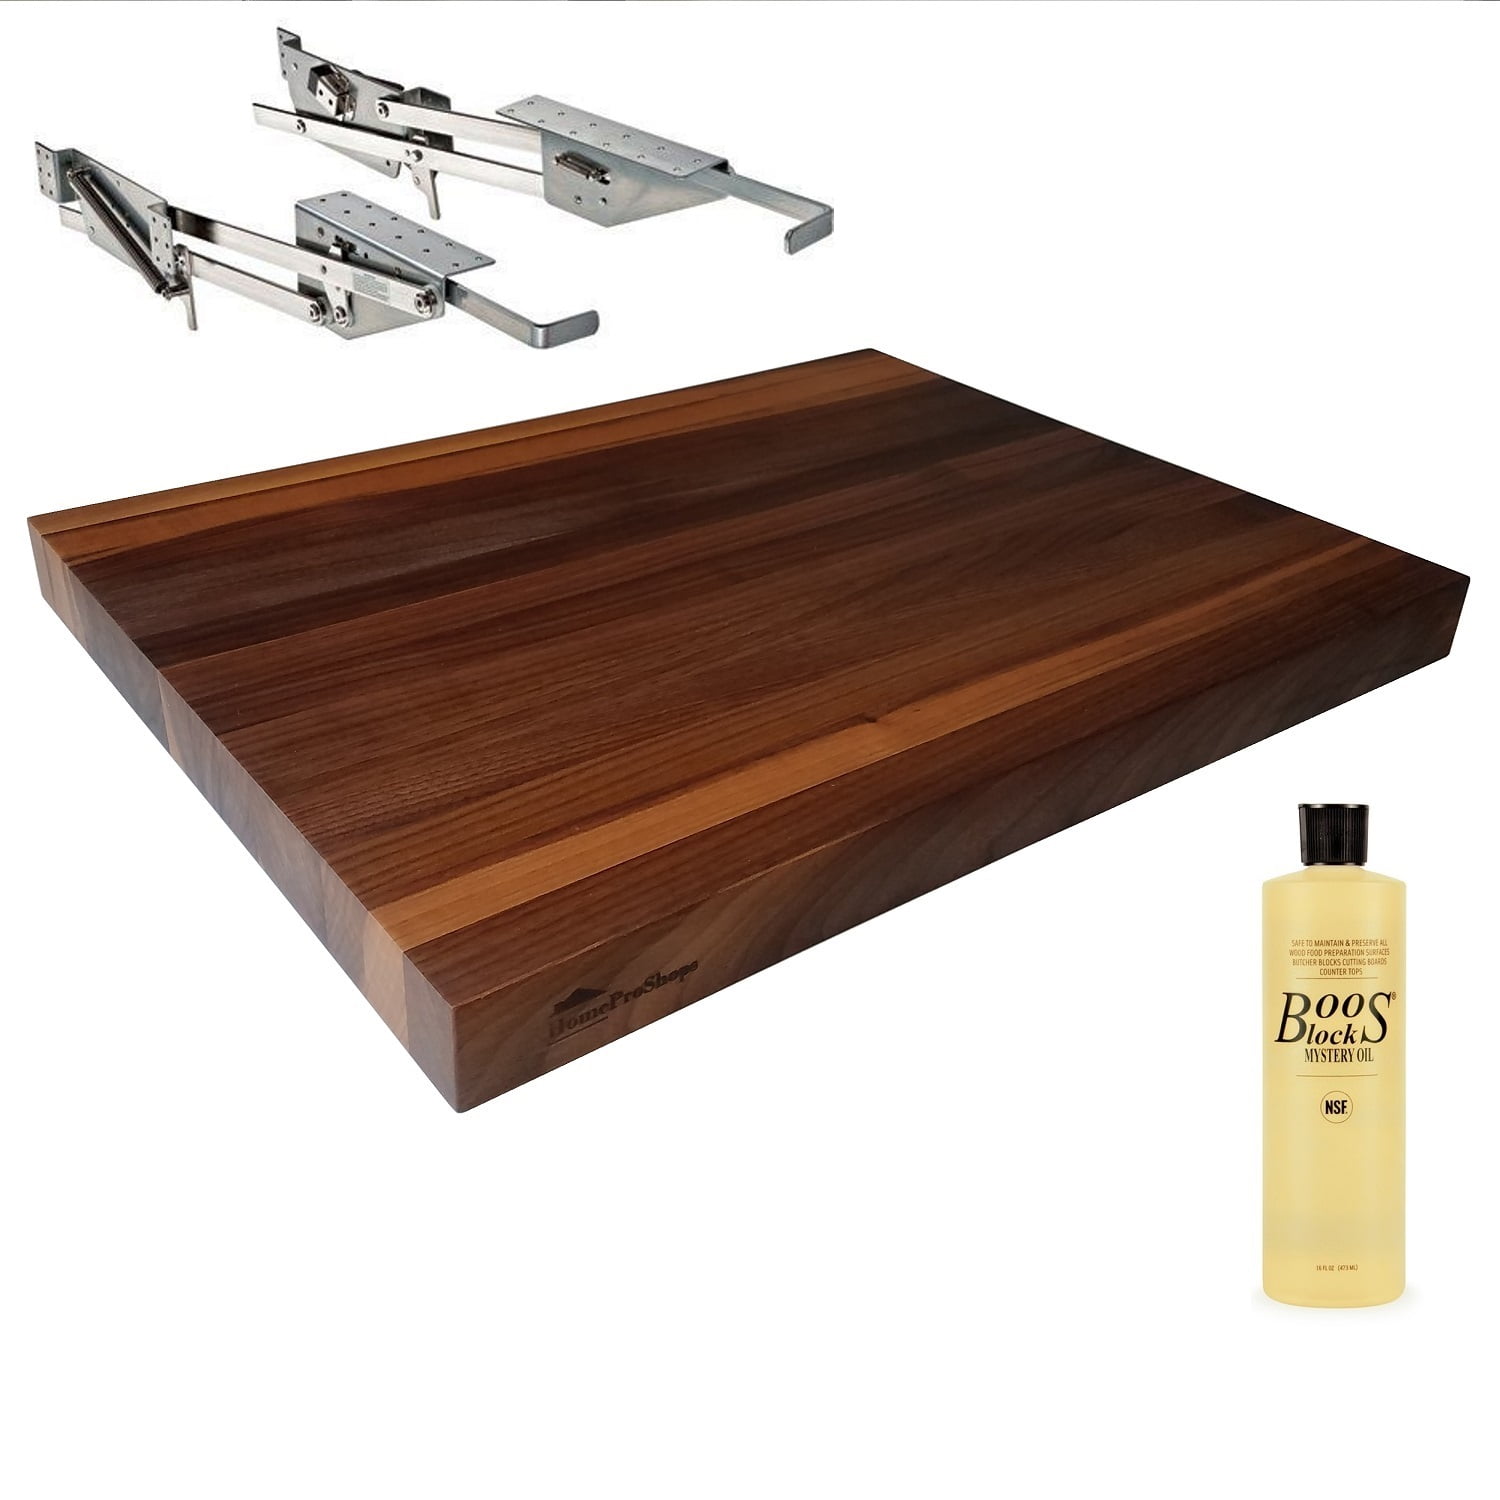 Wood Shelf Platform ONLY - 3/4 x 15 x 19 - For Revashelf RAS-ML-HDCR  Heavy Duty Mixer Lift - Maple Butcher Block - w John Boos MYSB Mystery Oil  16 oz Bottle